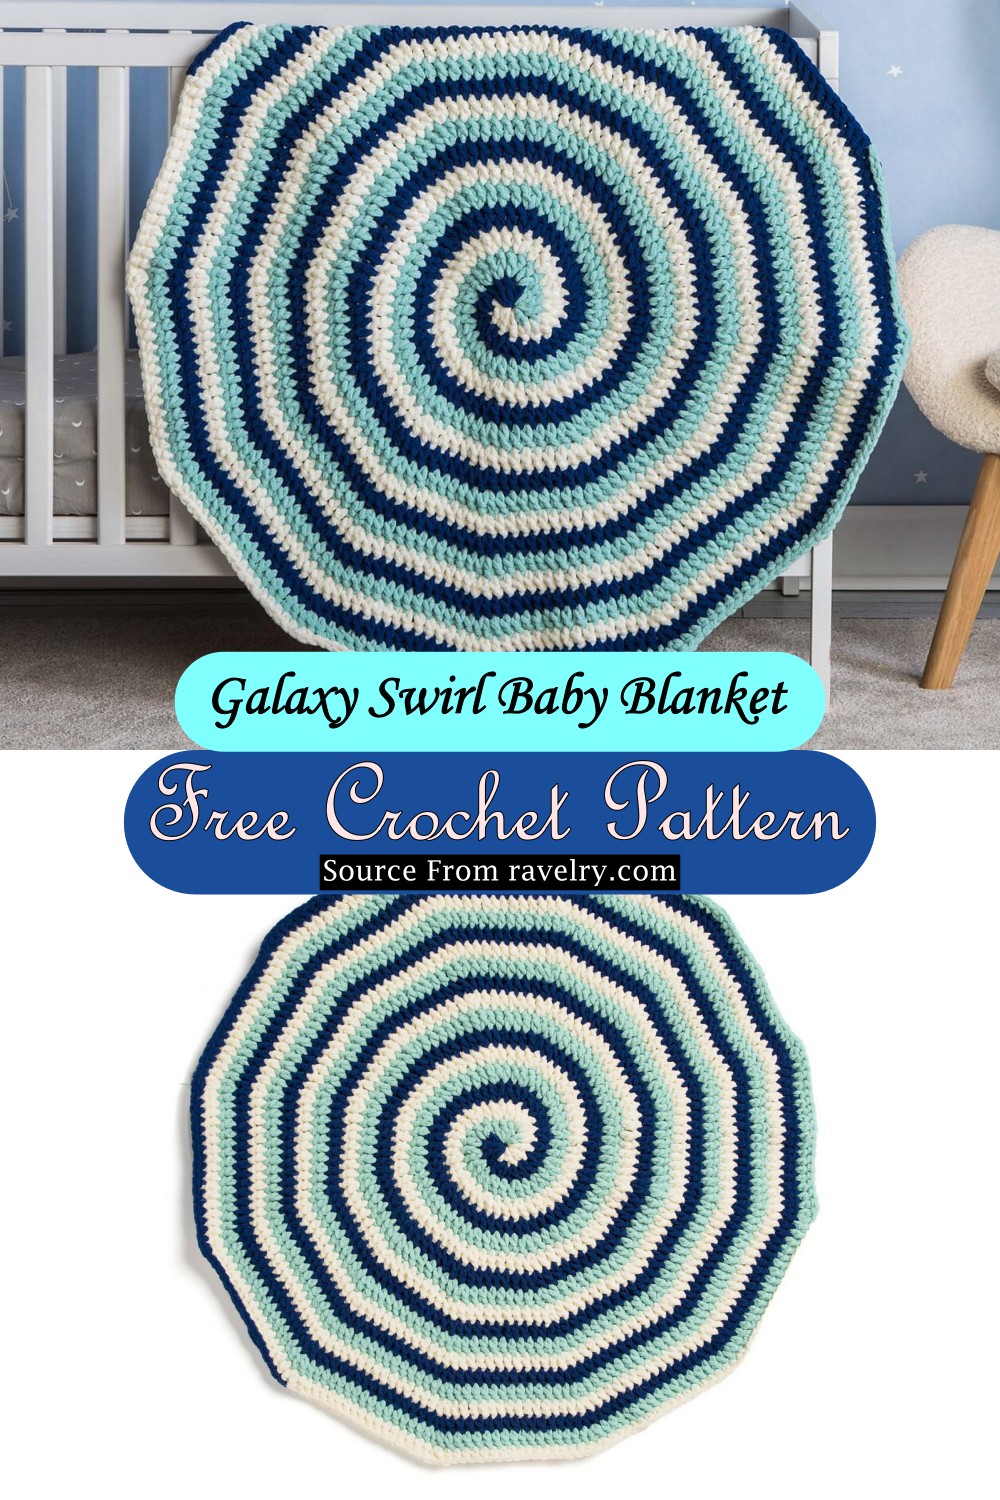 Galaxy Swirl Baby Blanket